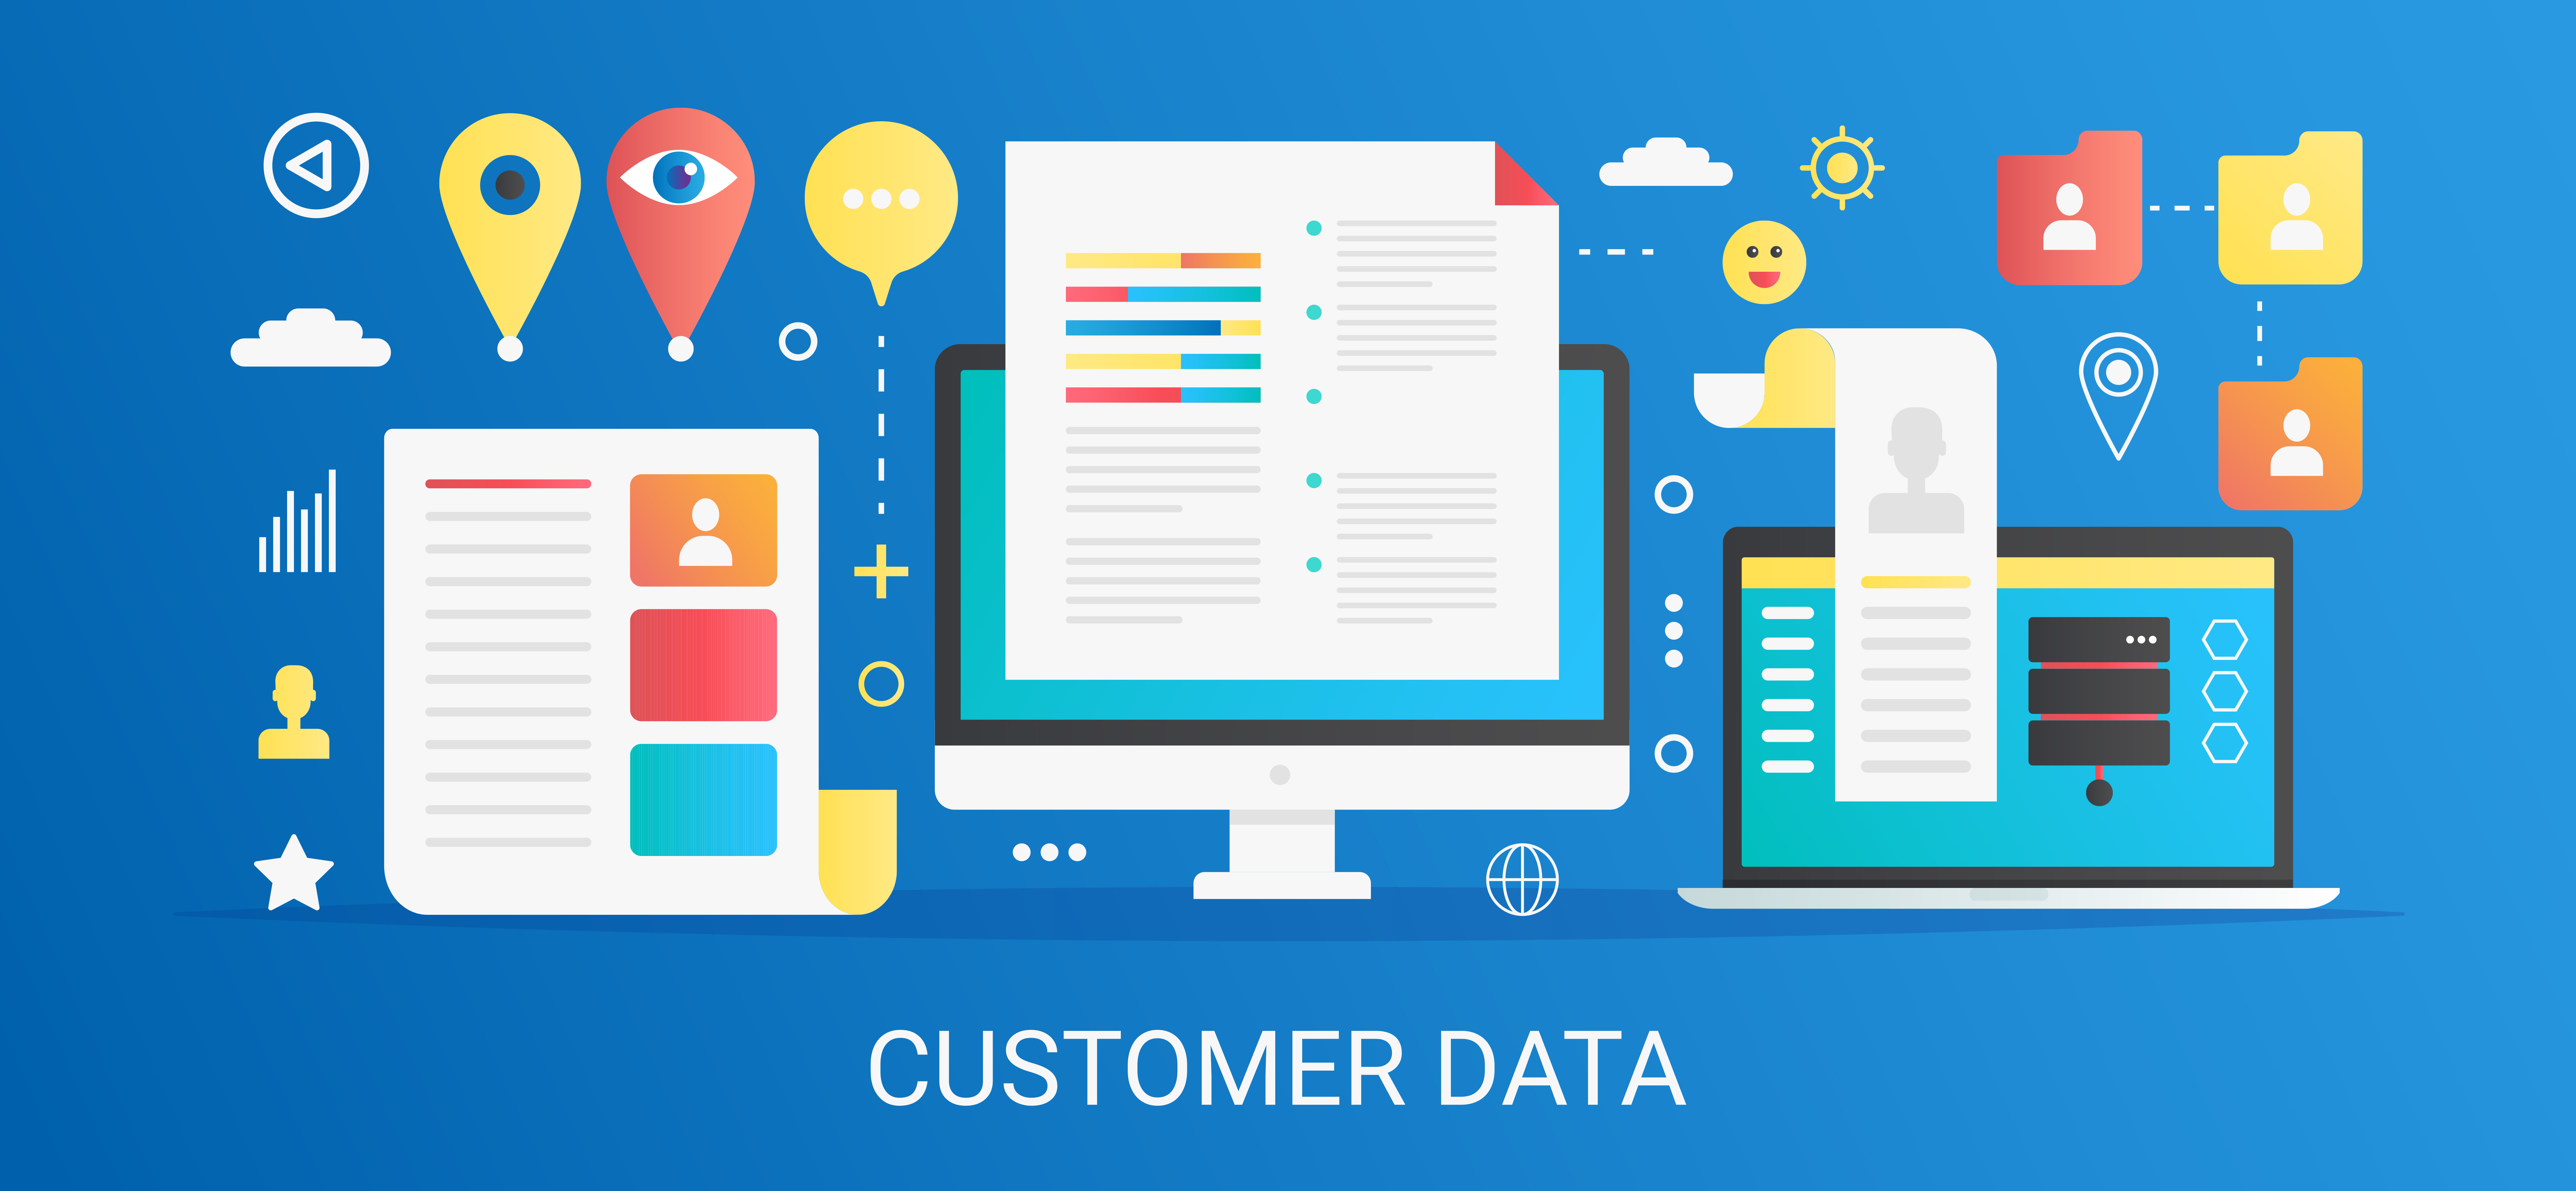 Customer data points